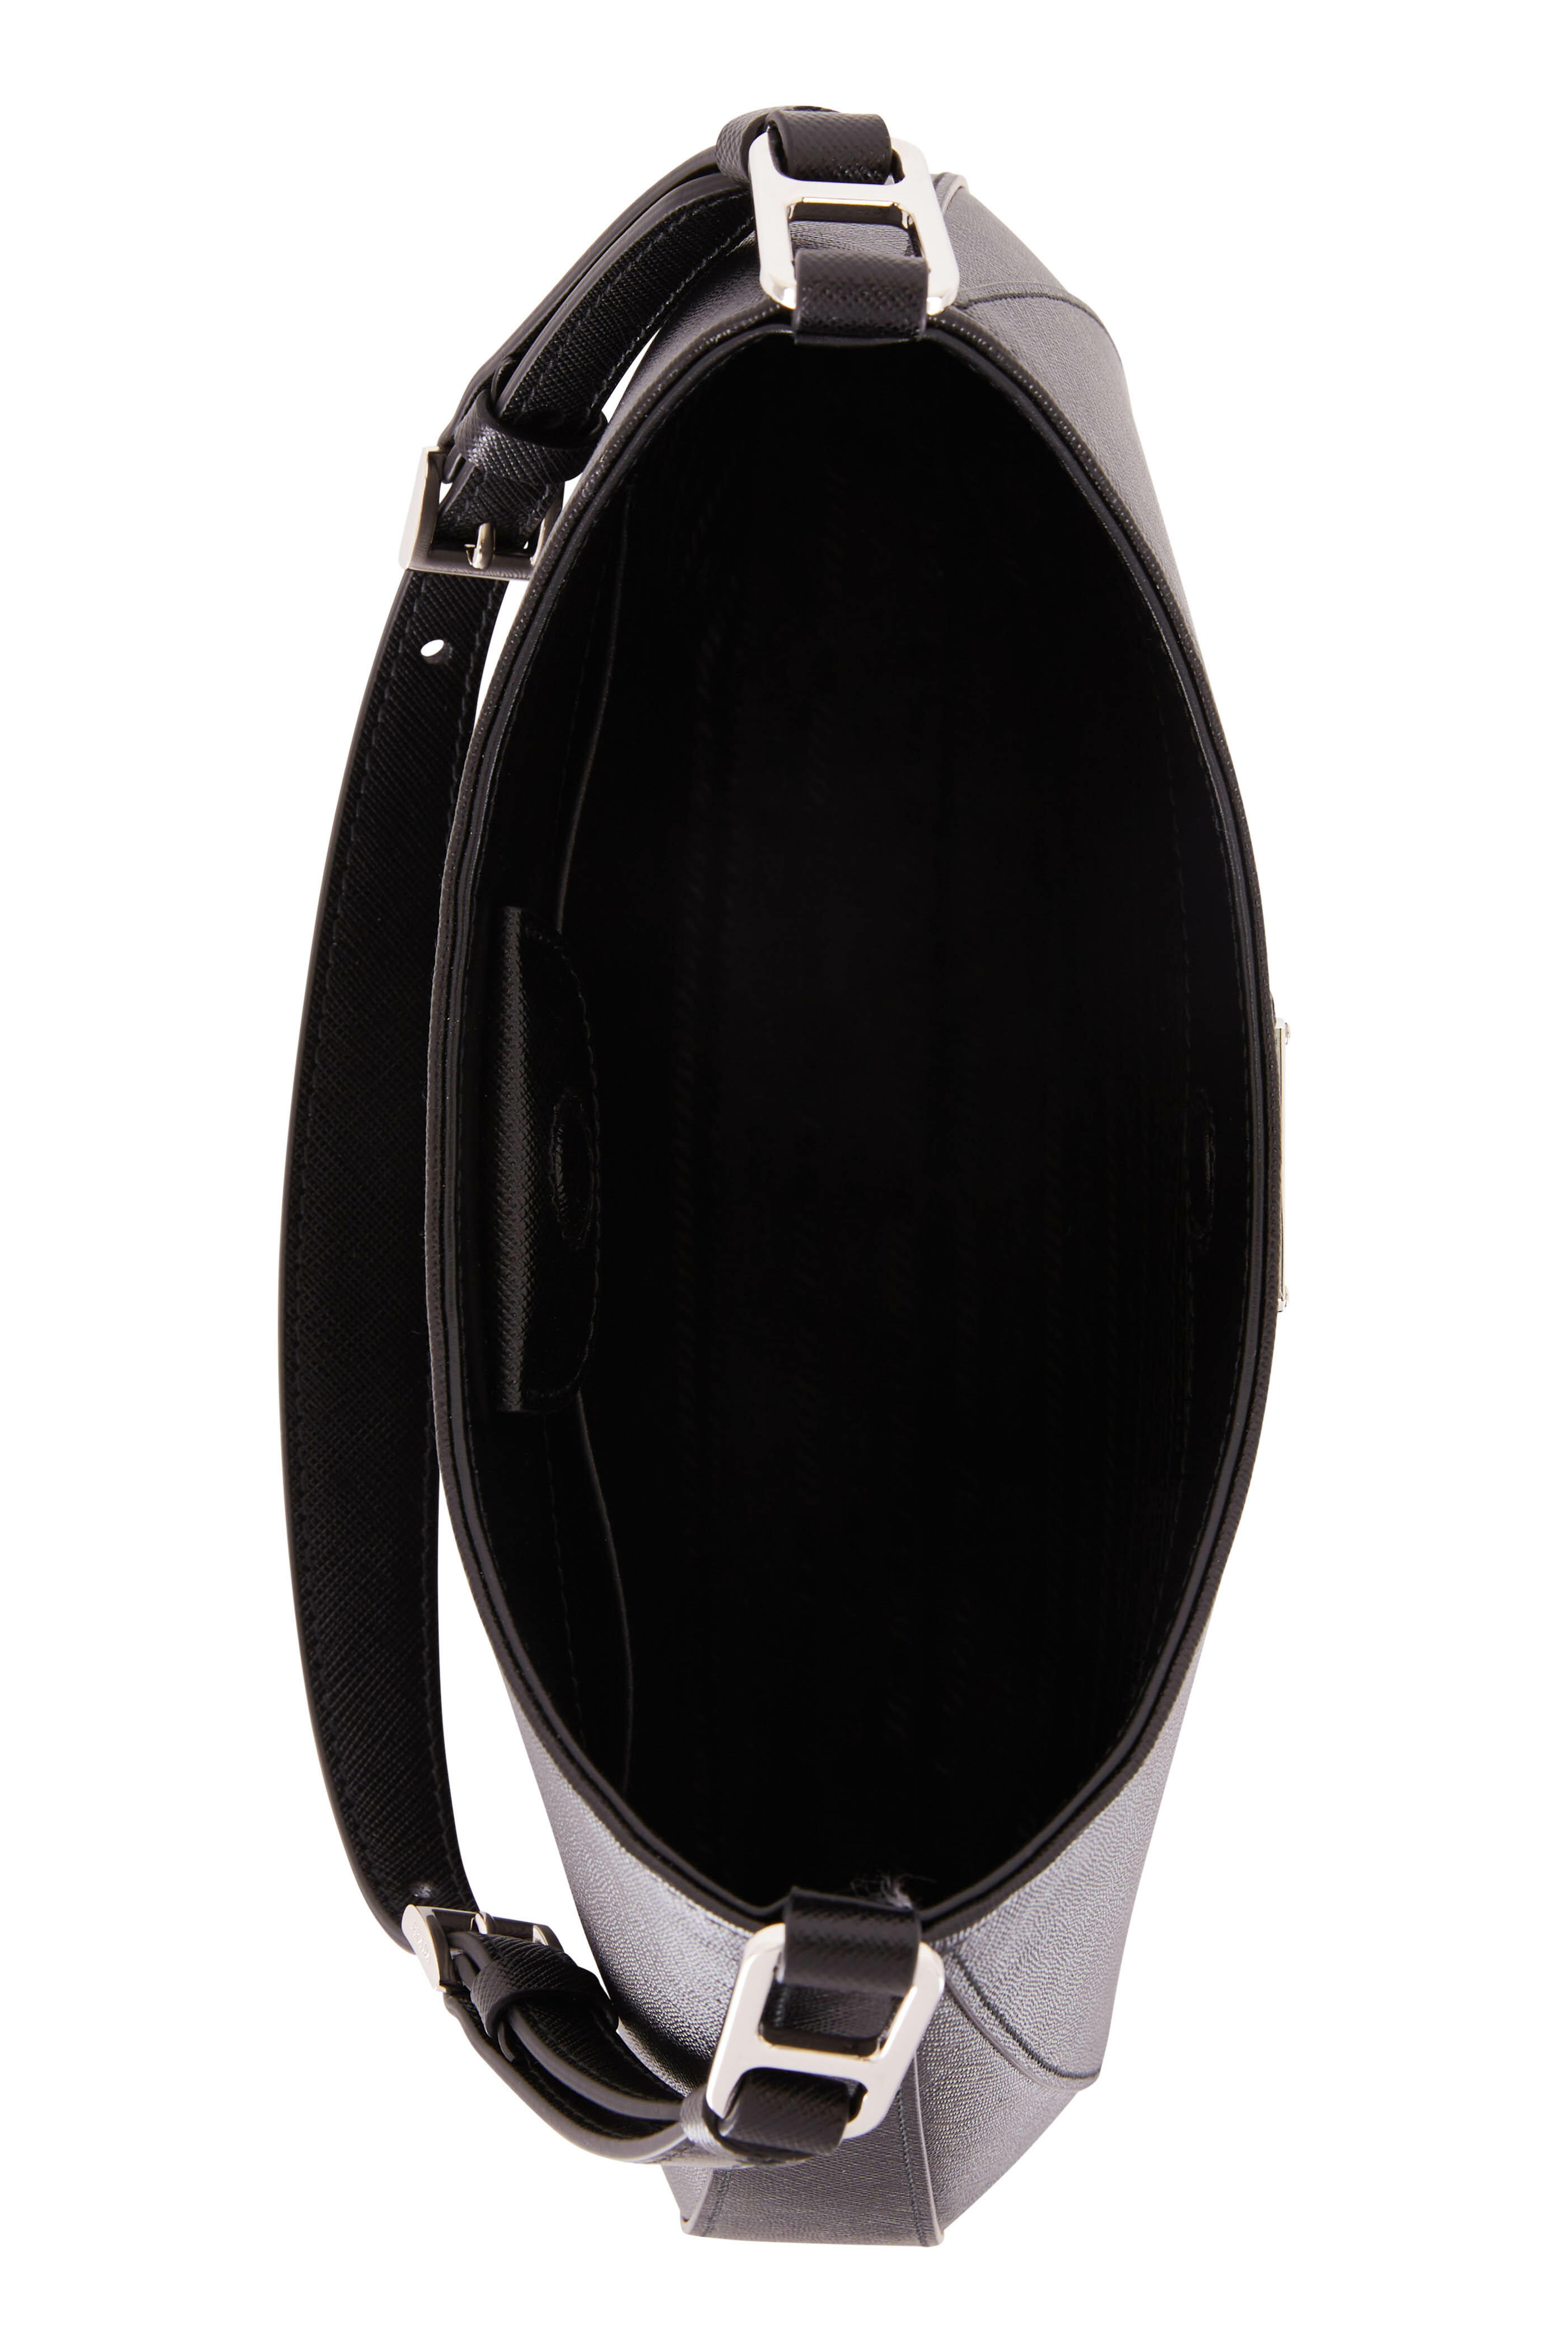 Black Prada Emblème Saffiano Shoulder Bag